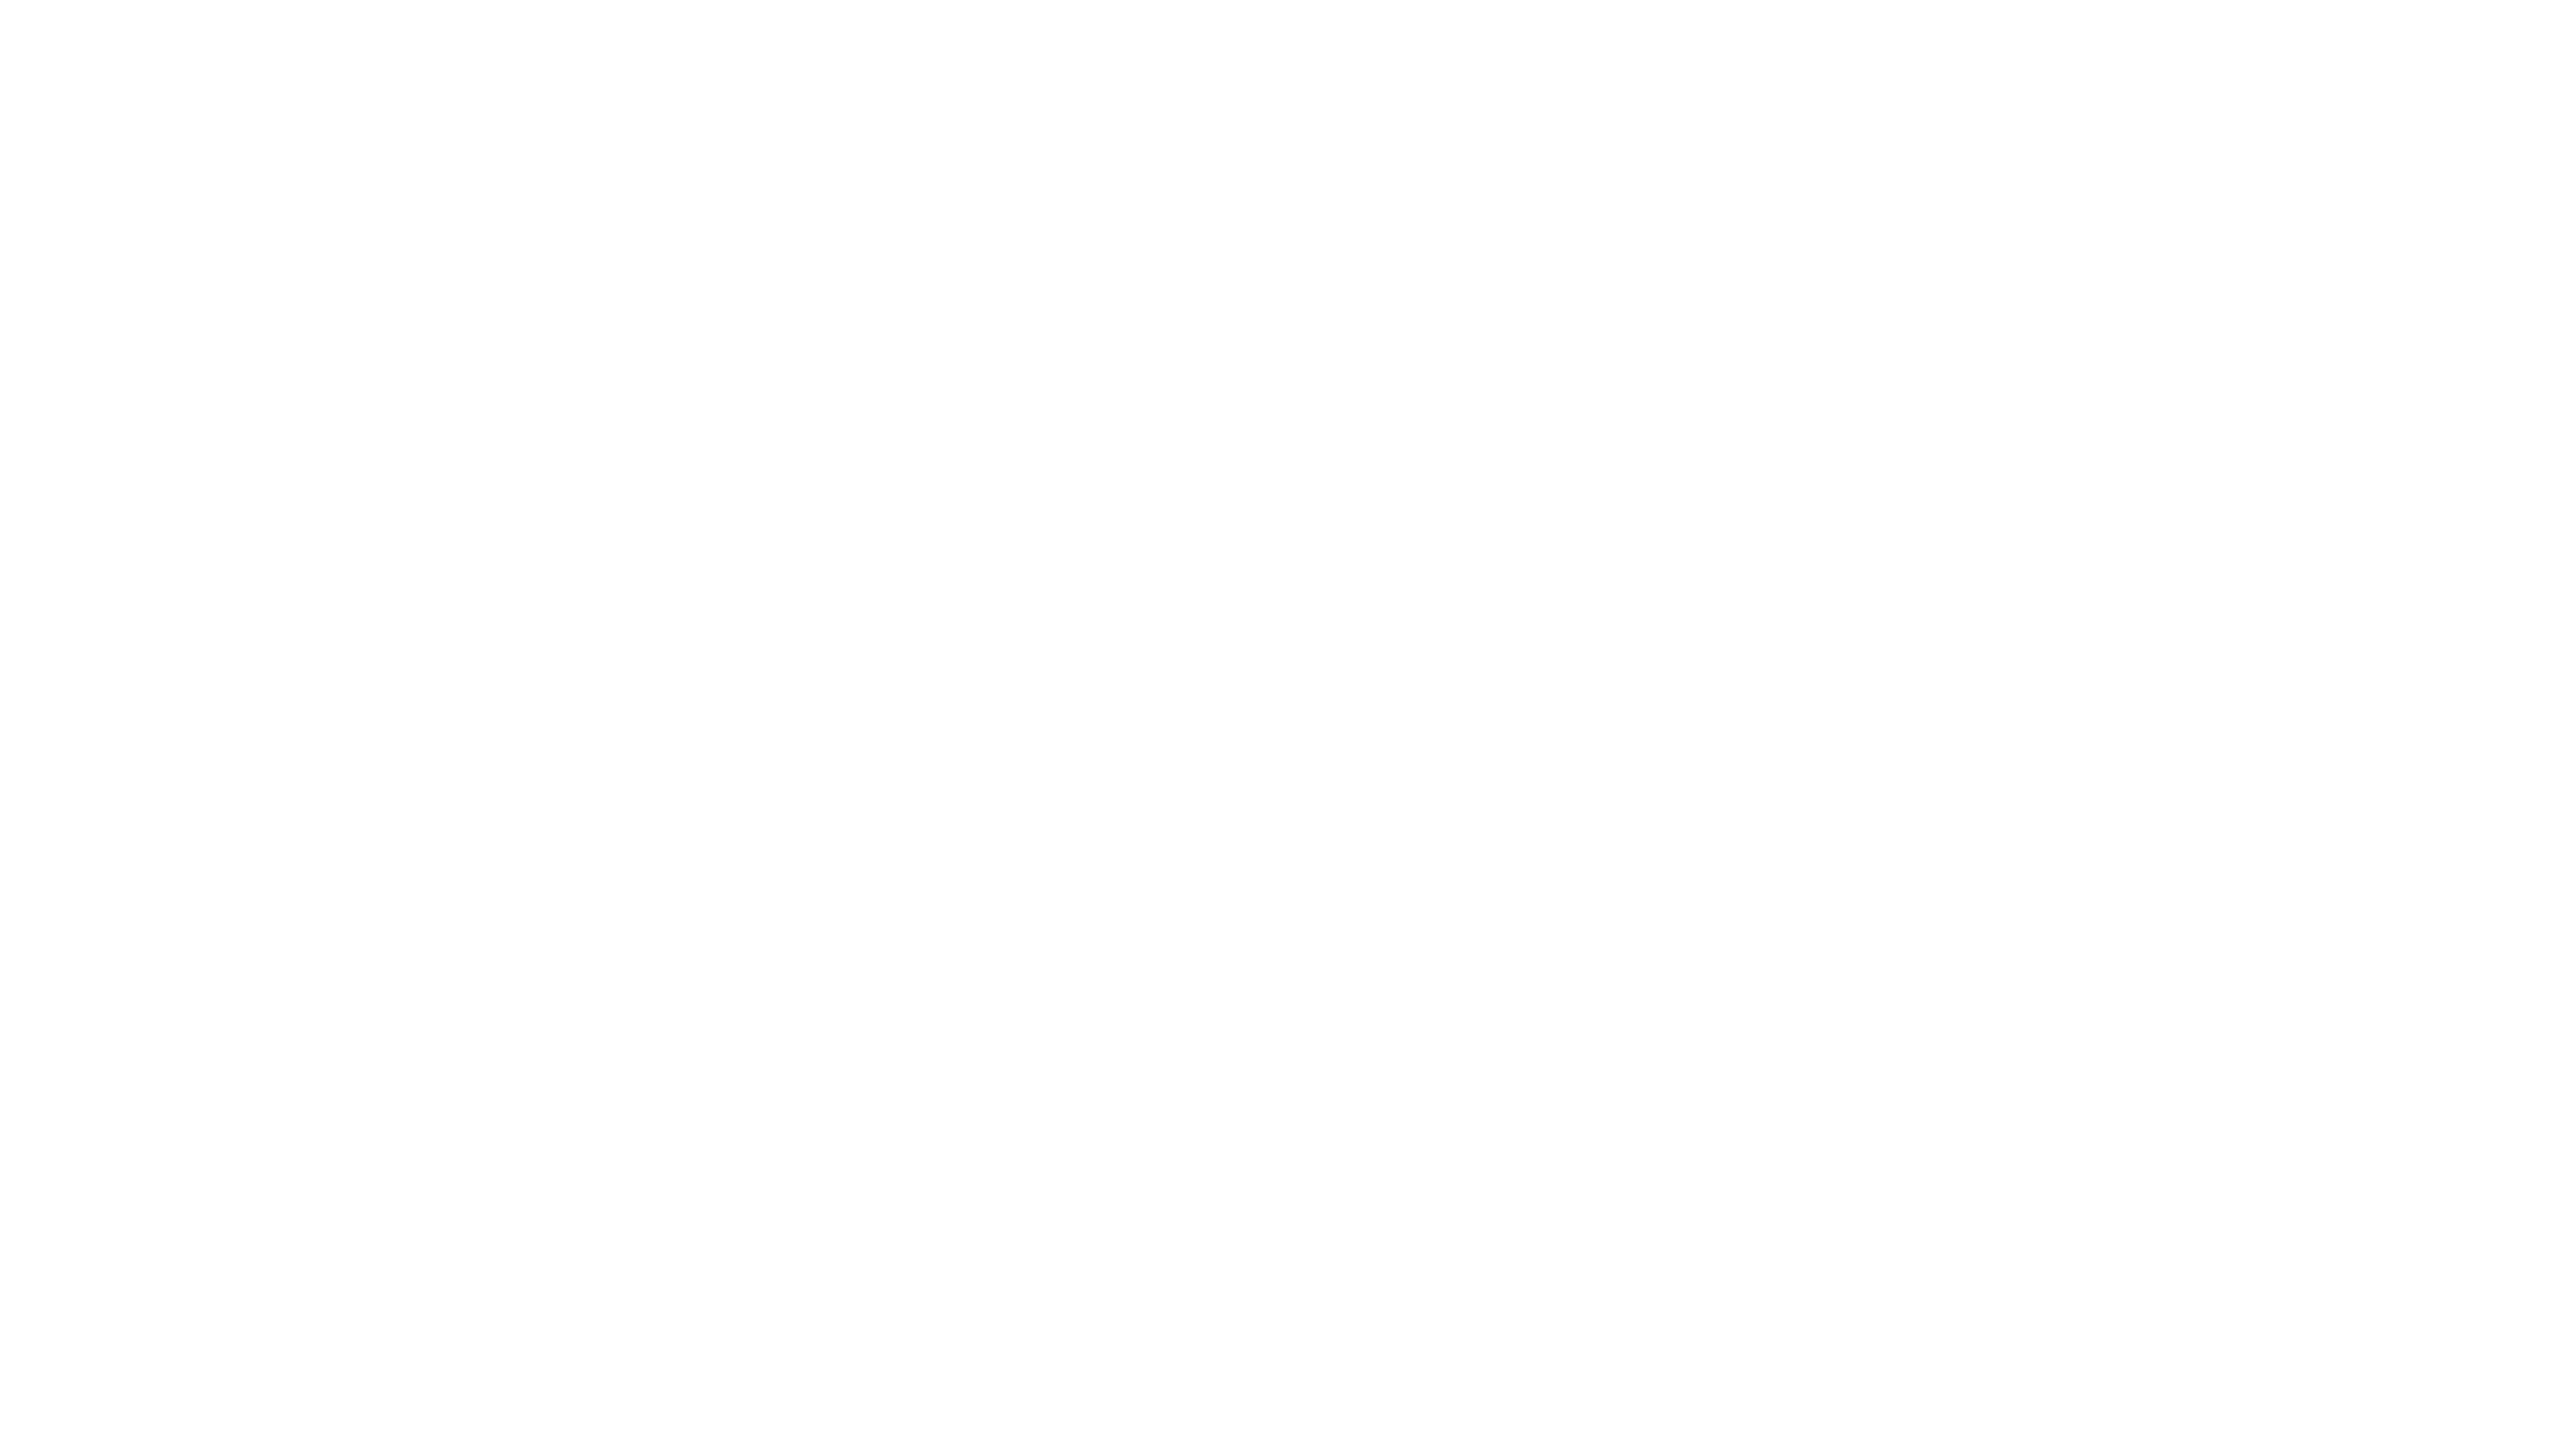 legal & general logo white